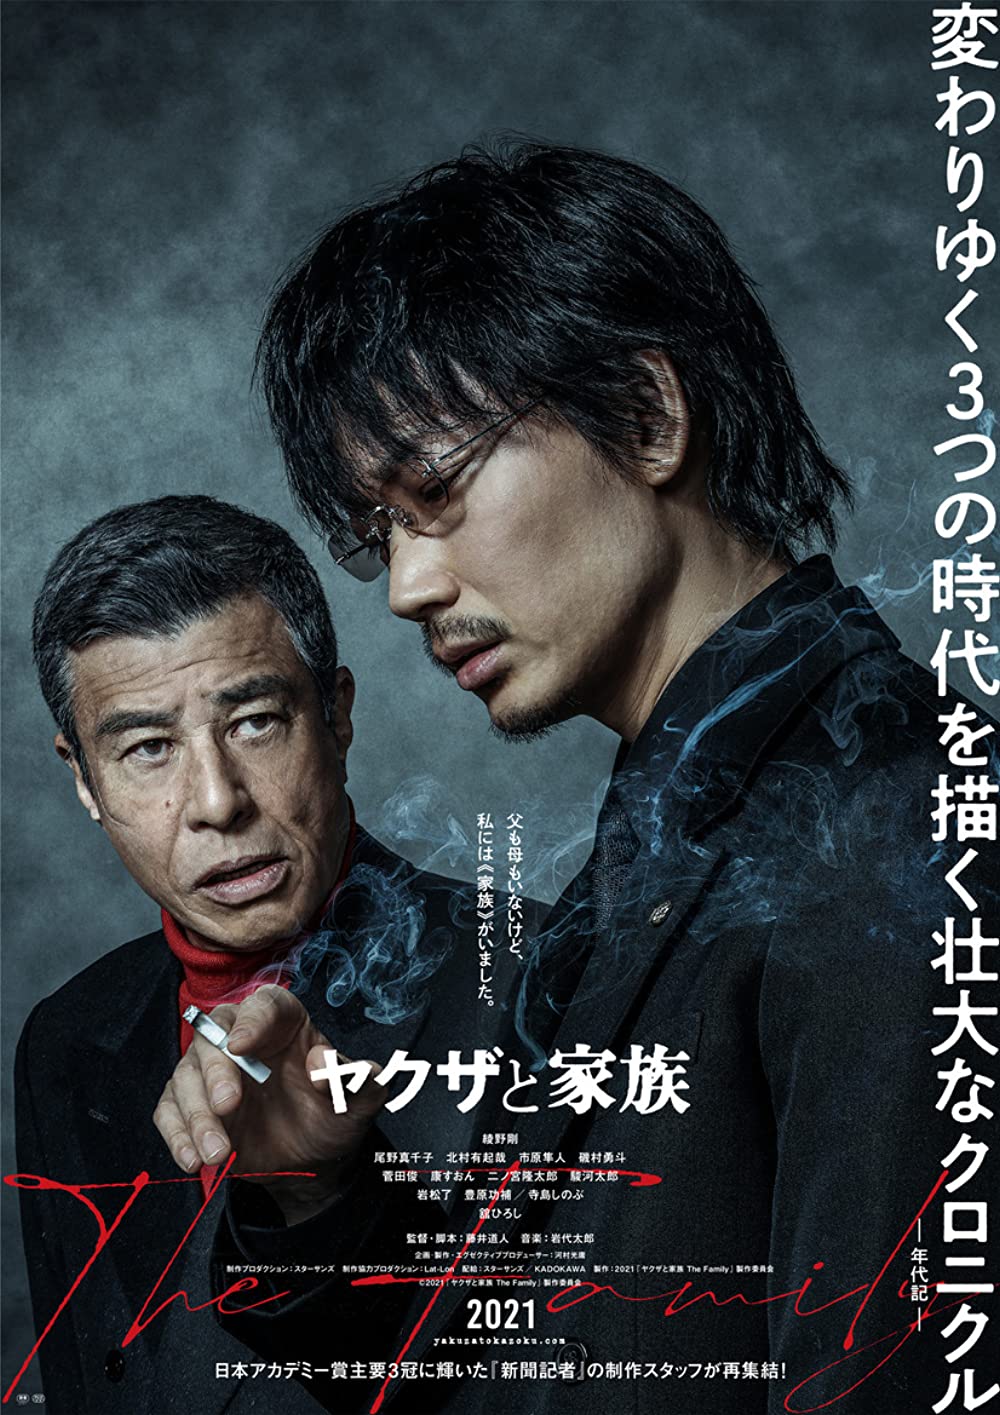 9 Film Netflix kisah tentang Yakuza, dihiasi aksi balas dendam